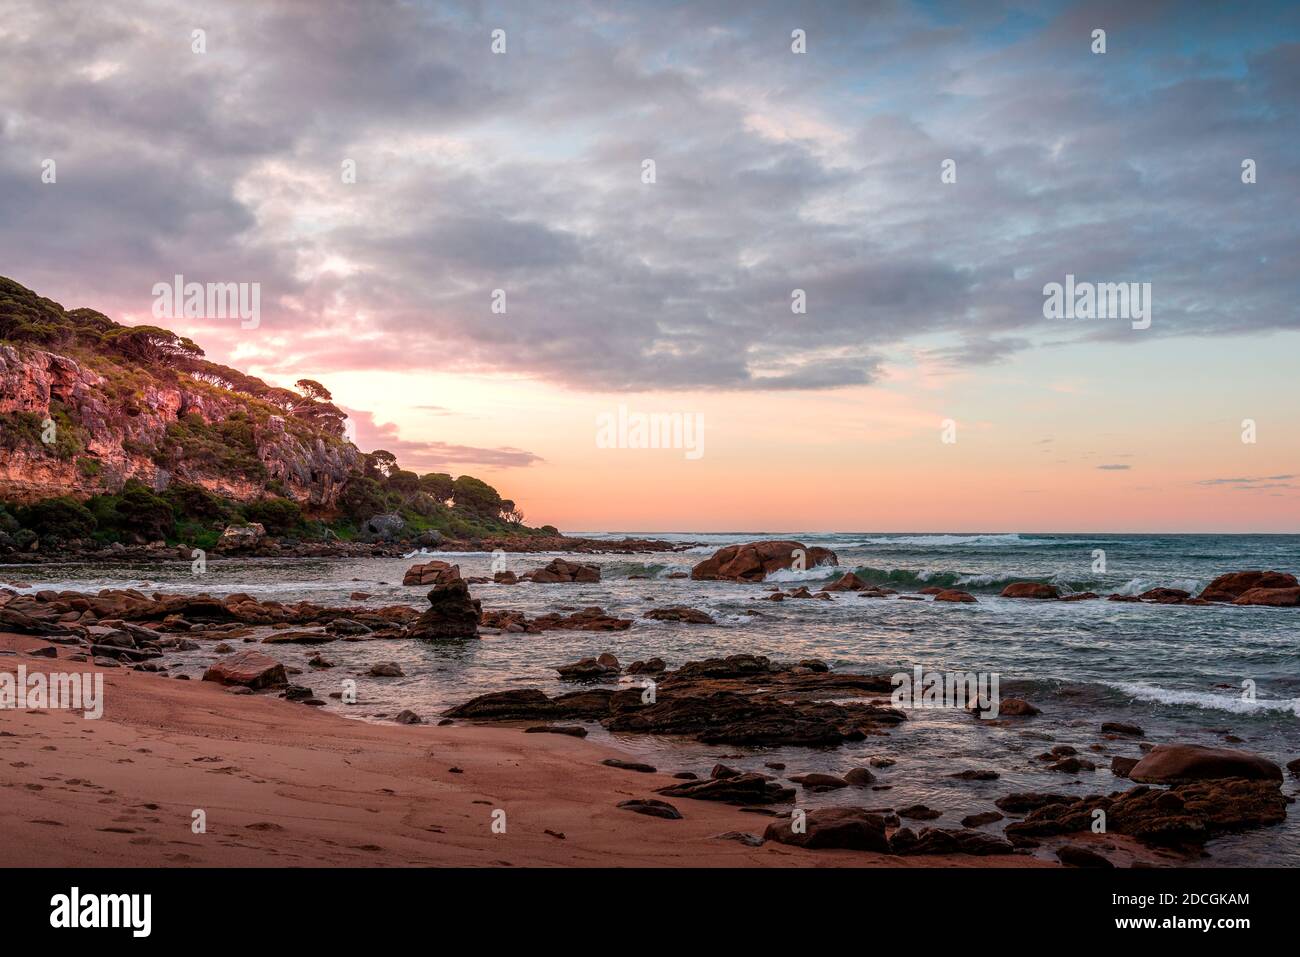 A coastal scene at sunset on a rocky shore Stock Photo